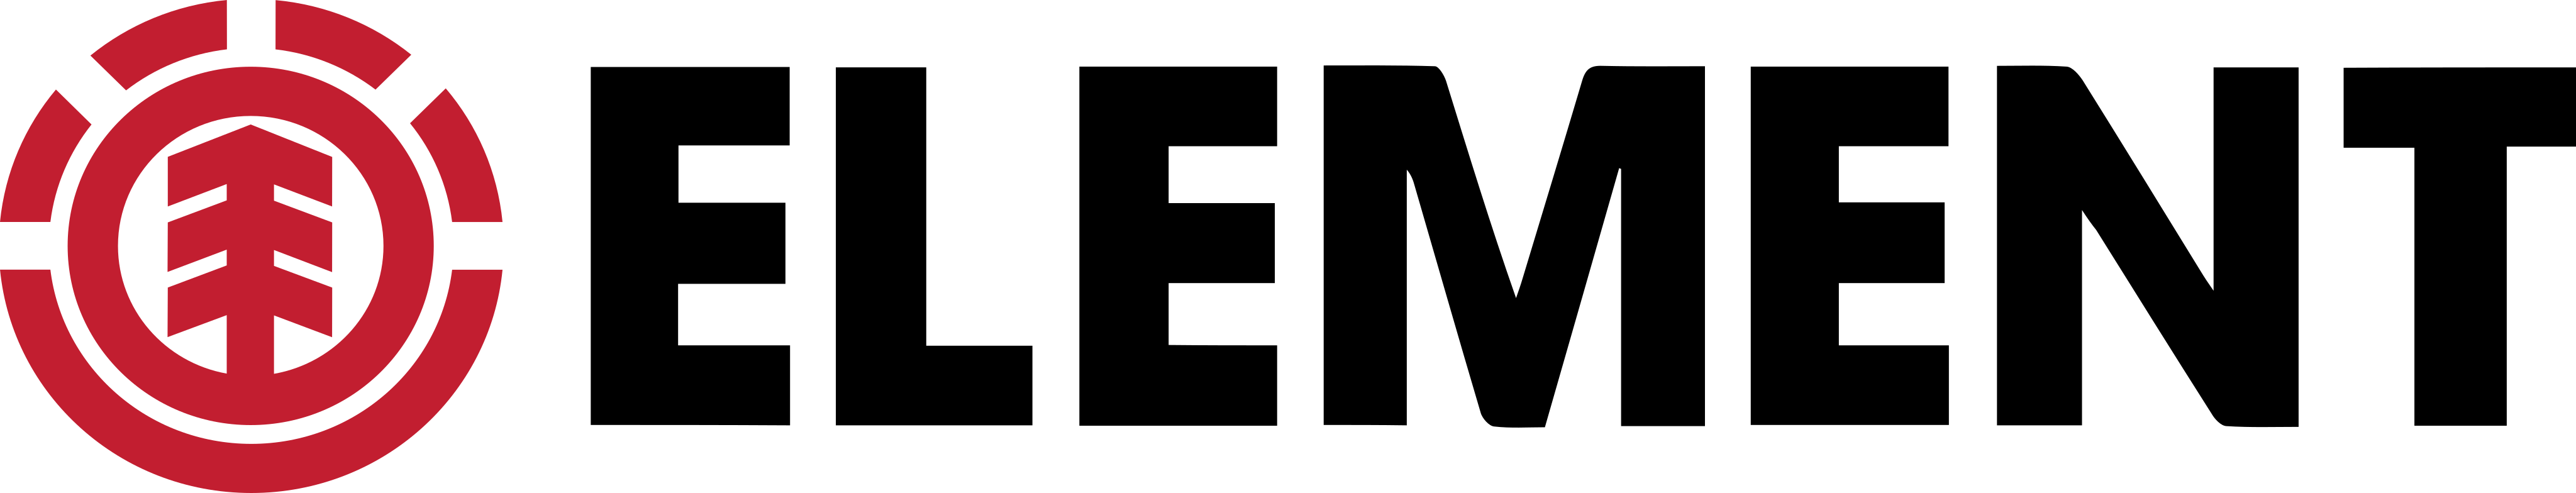 element logo - Element Skateboards Logo